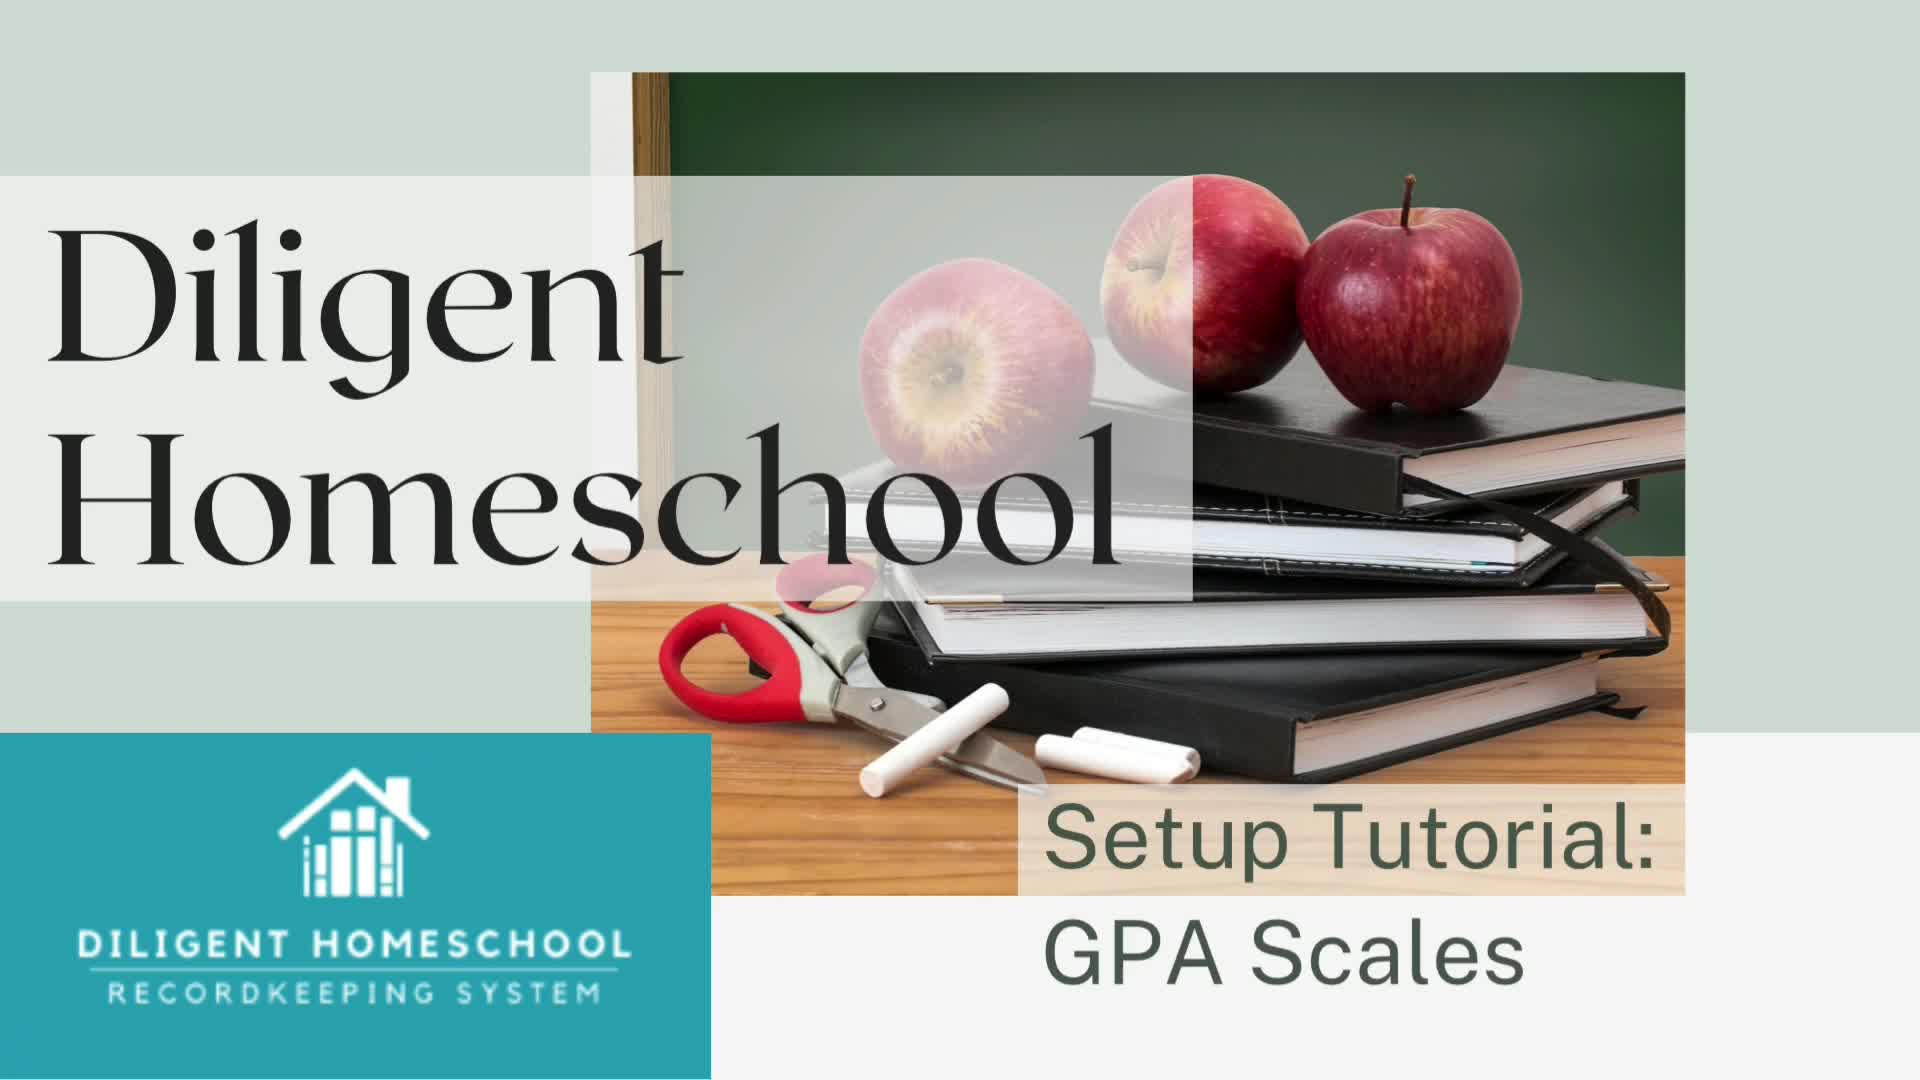 diligent-homeschool-setup-tutorial-gpa-scales